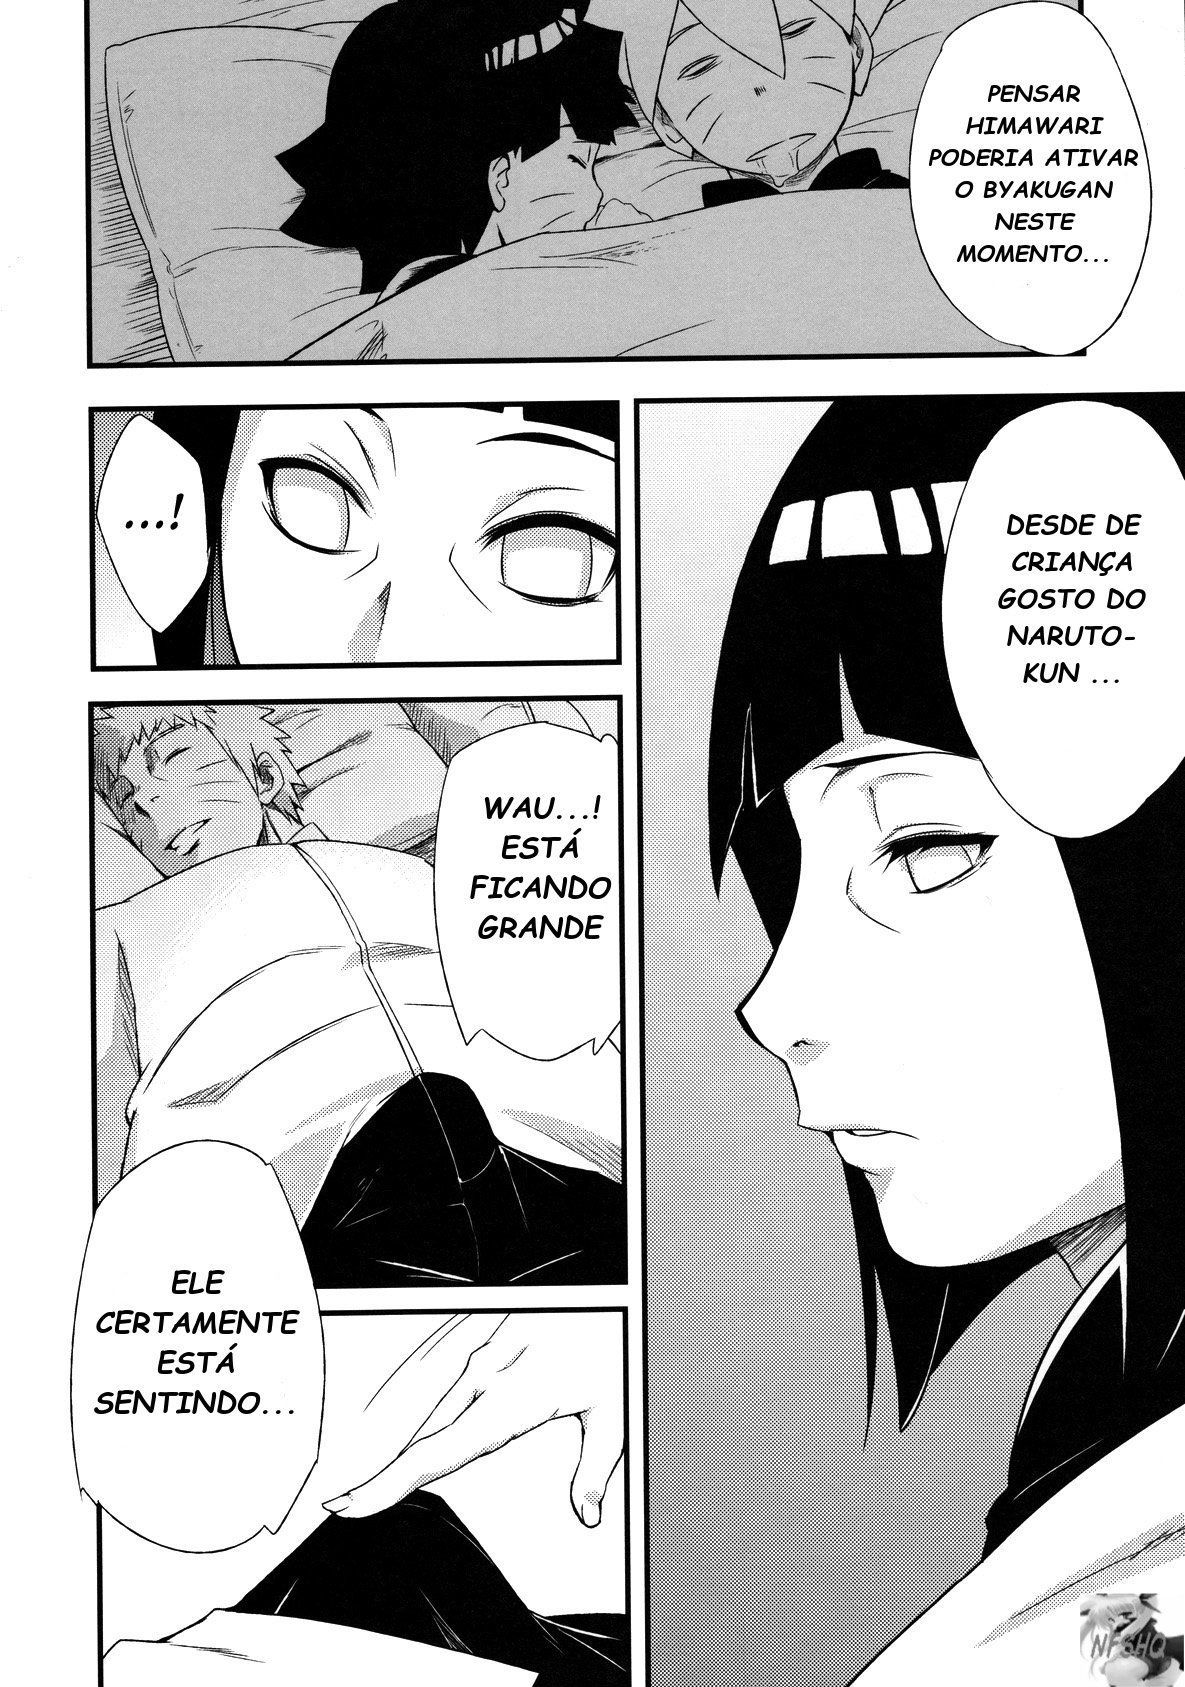 Hinata sendo amante de Naruto